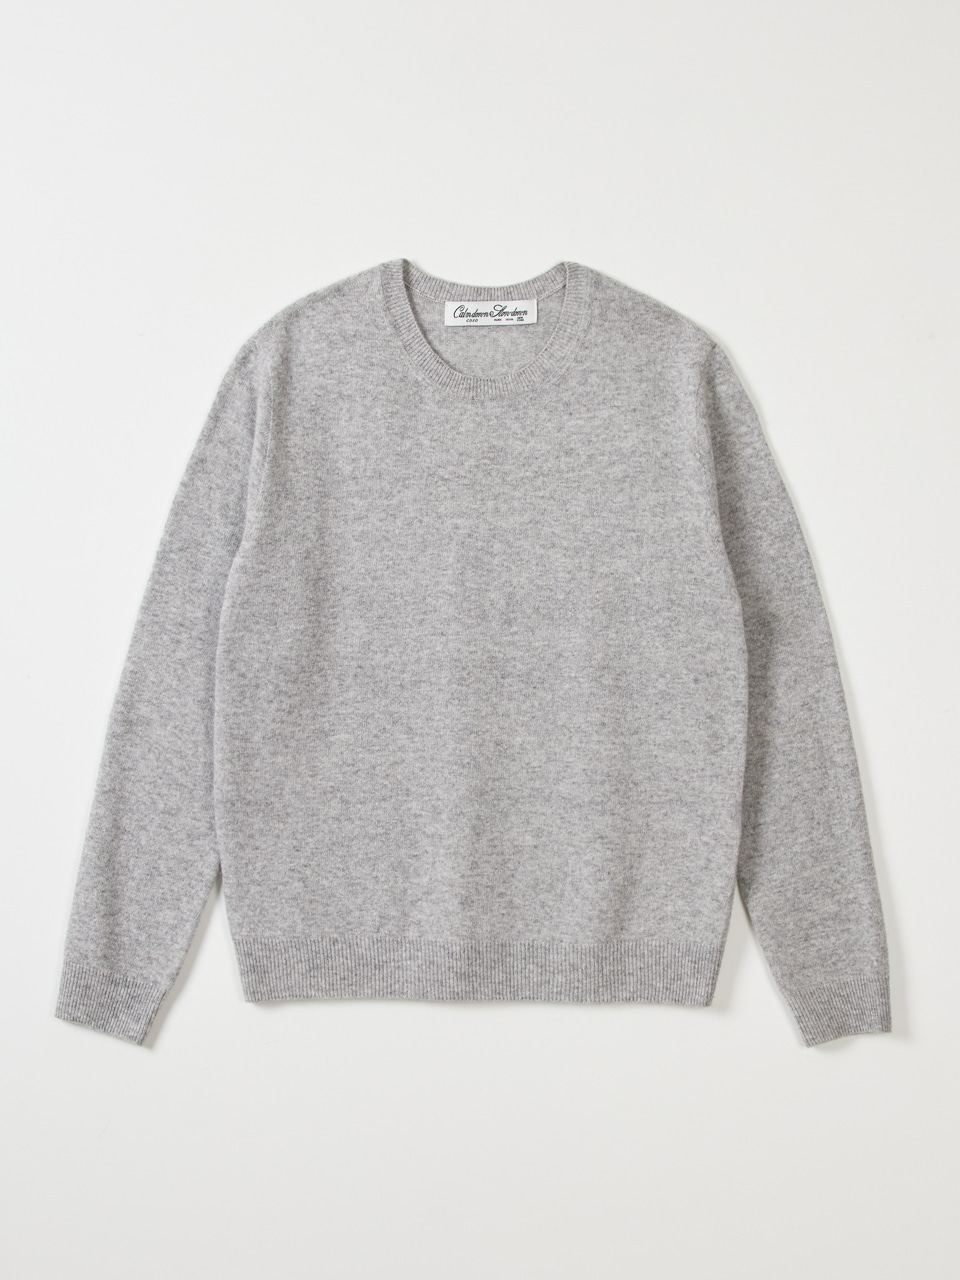 [PRE-ORDER]Crew-neck wool cashmere knitwear_light grey((미입금취소분 1/31 재오픈)